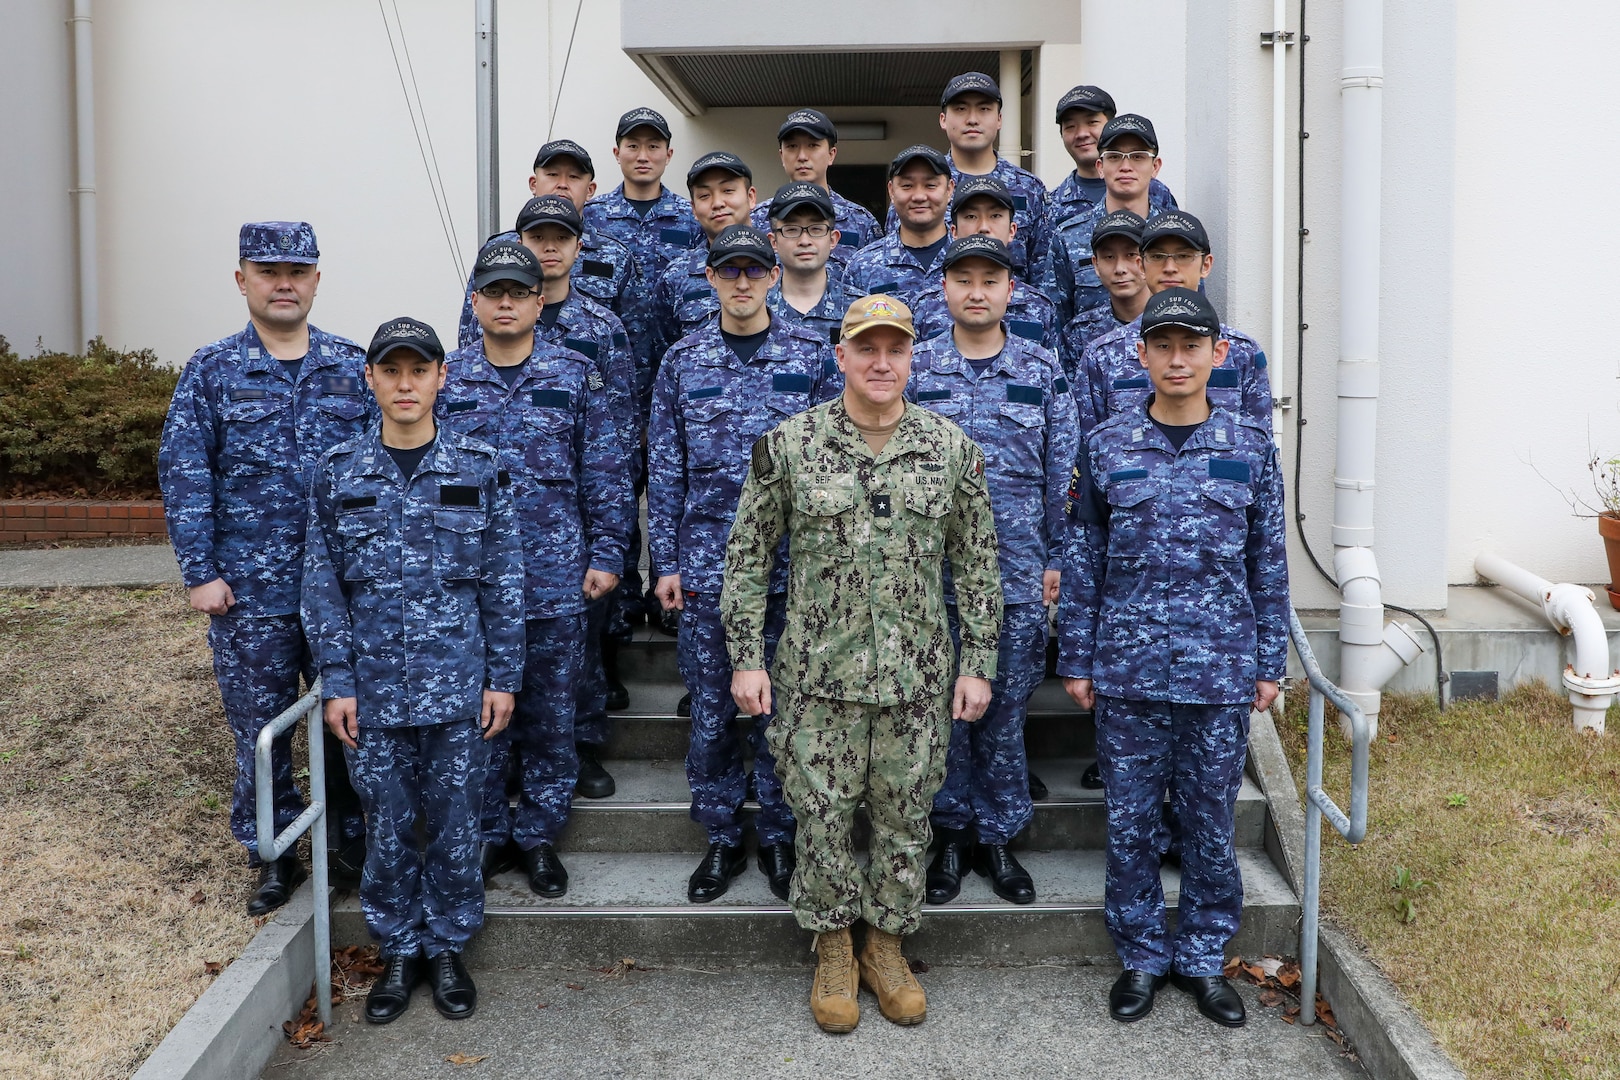 Submarine Group 7 Hosts Japanese Submarine Officers in Yokosuka